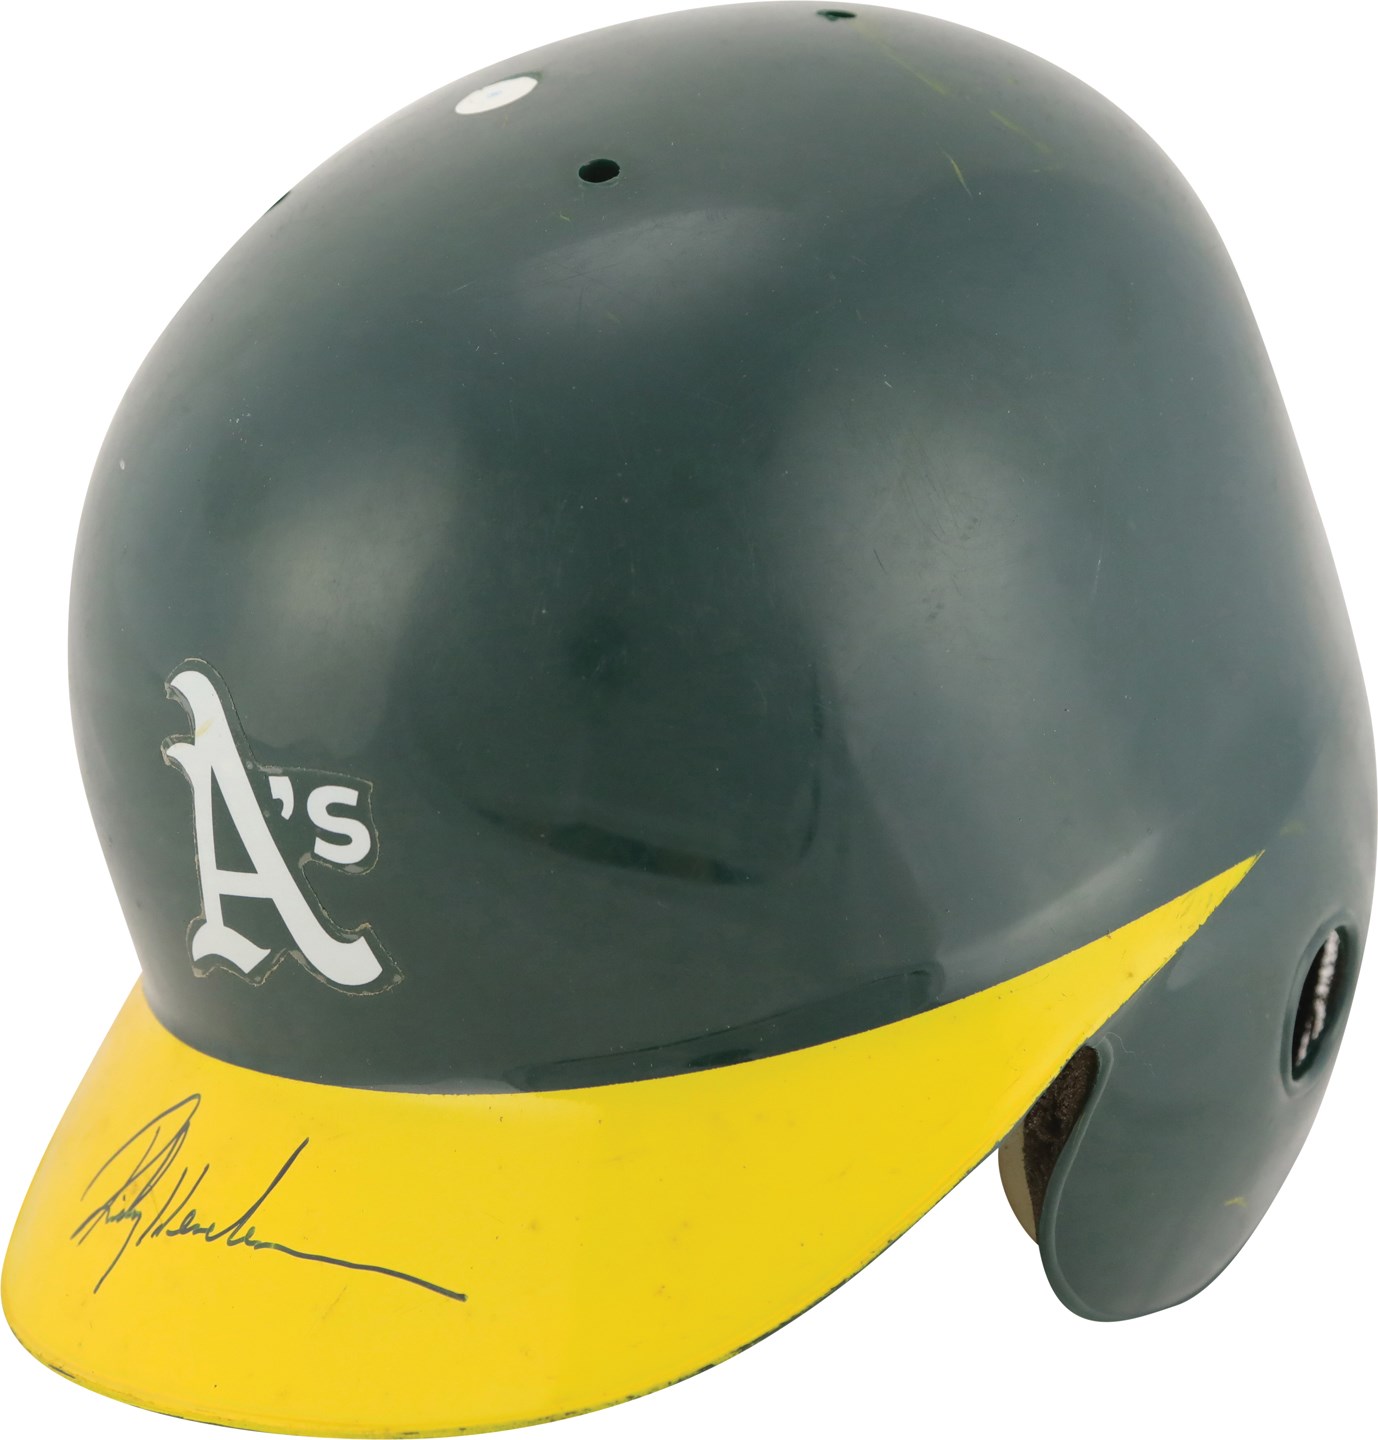 Baseball Equipment - 1990s Rickey Henderson Oakland Athletics Signed Game Used Helmet